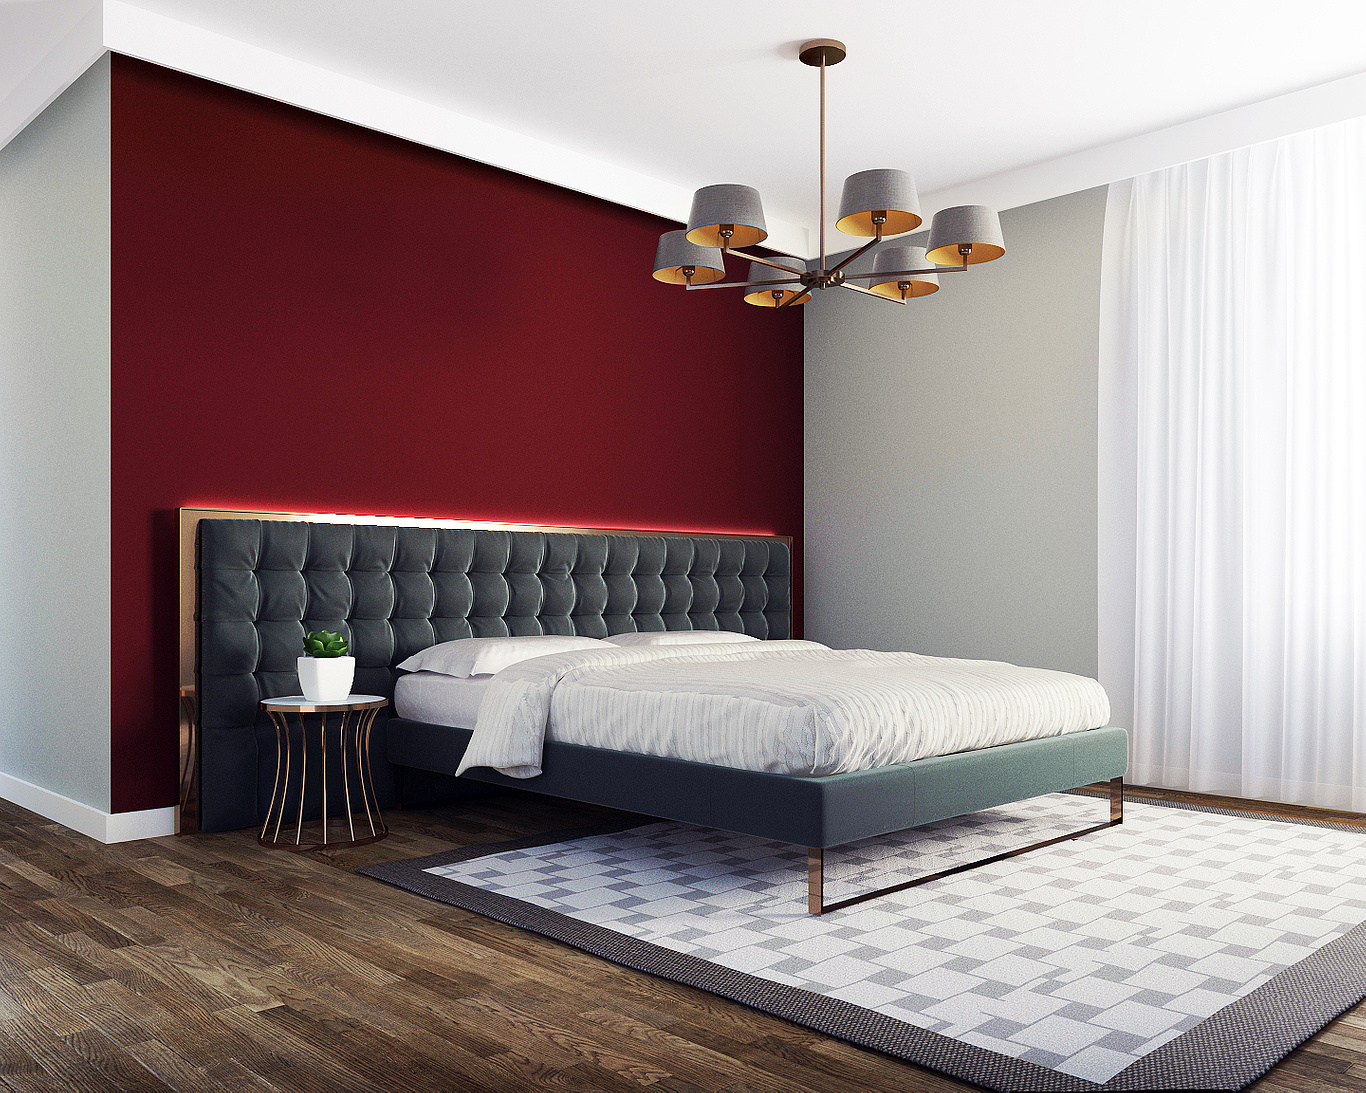 Crimson Bedroom | onur aygenc - CGarchitect - Architectural ...